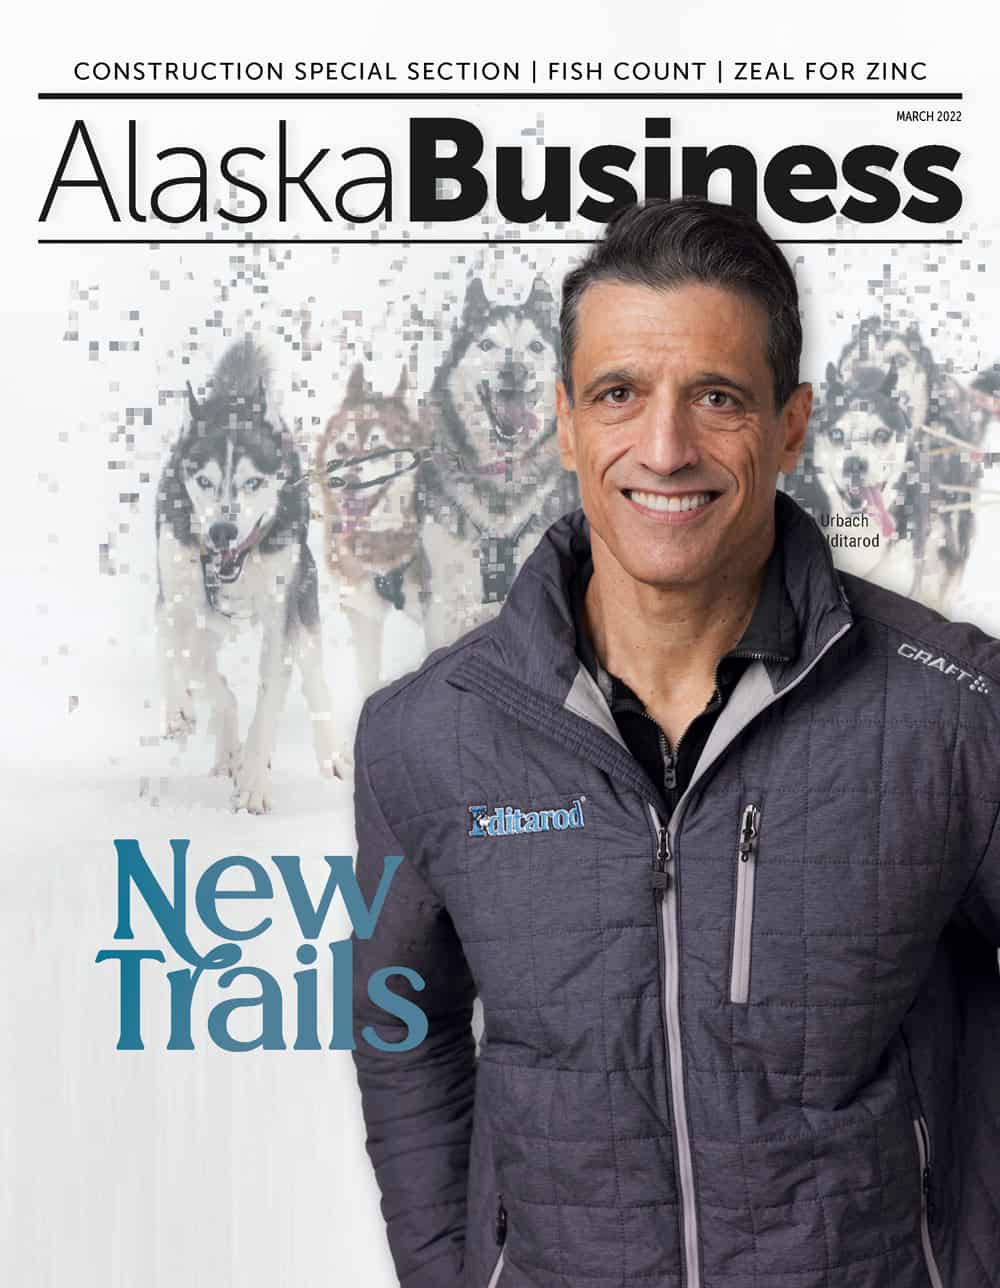 Alaska Business Magazine March 2022 cover